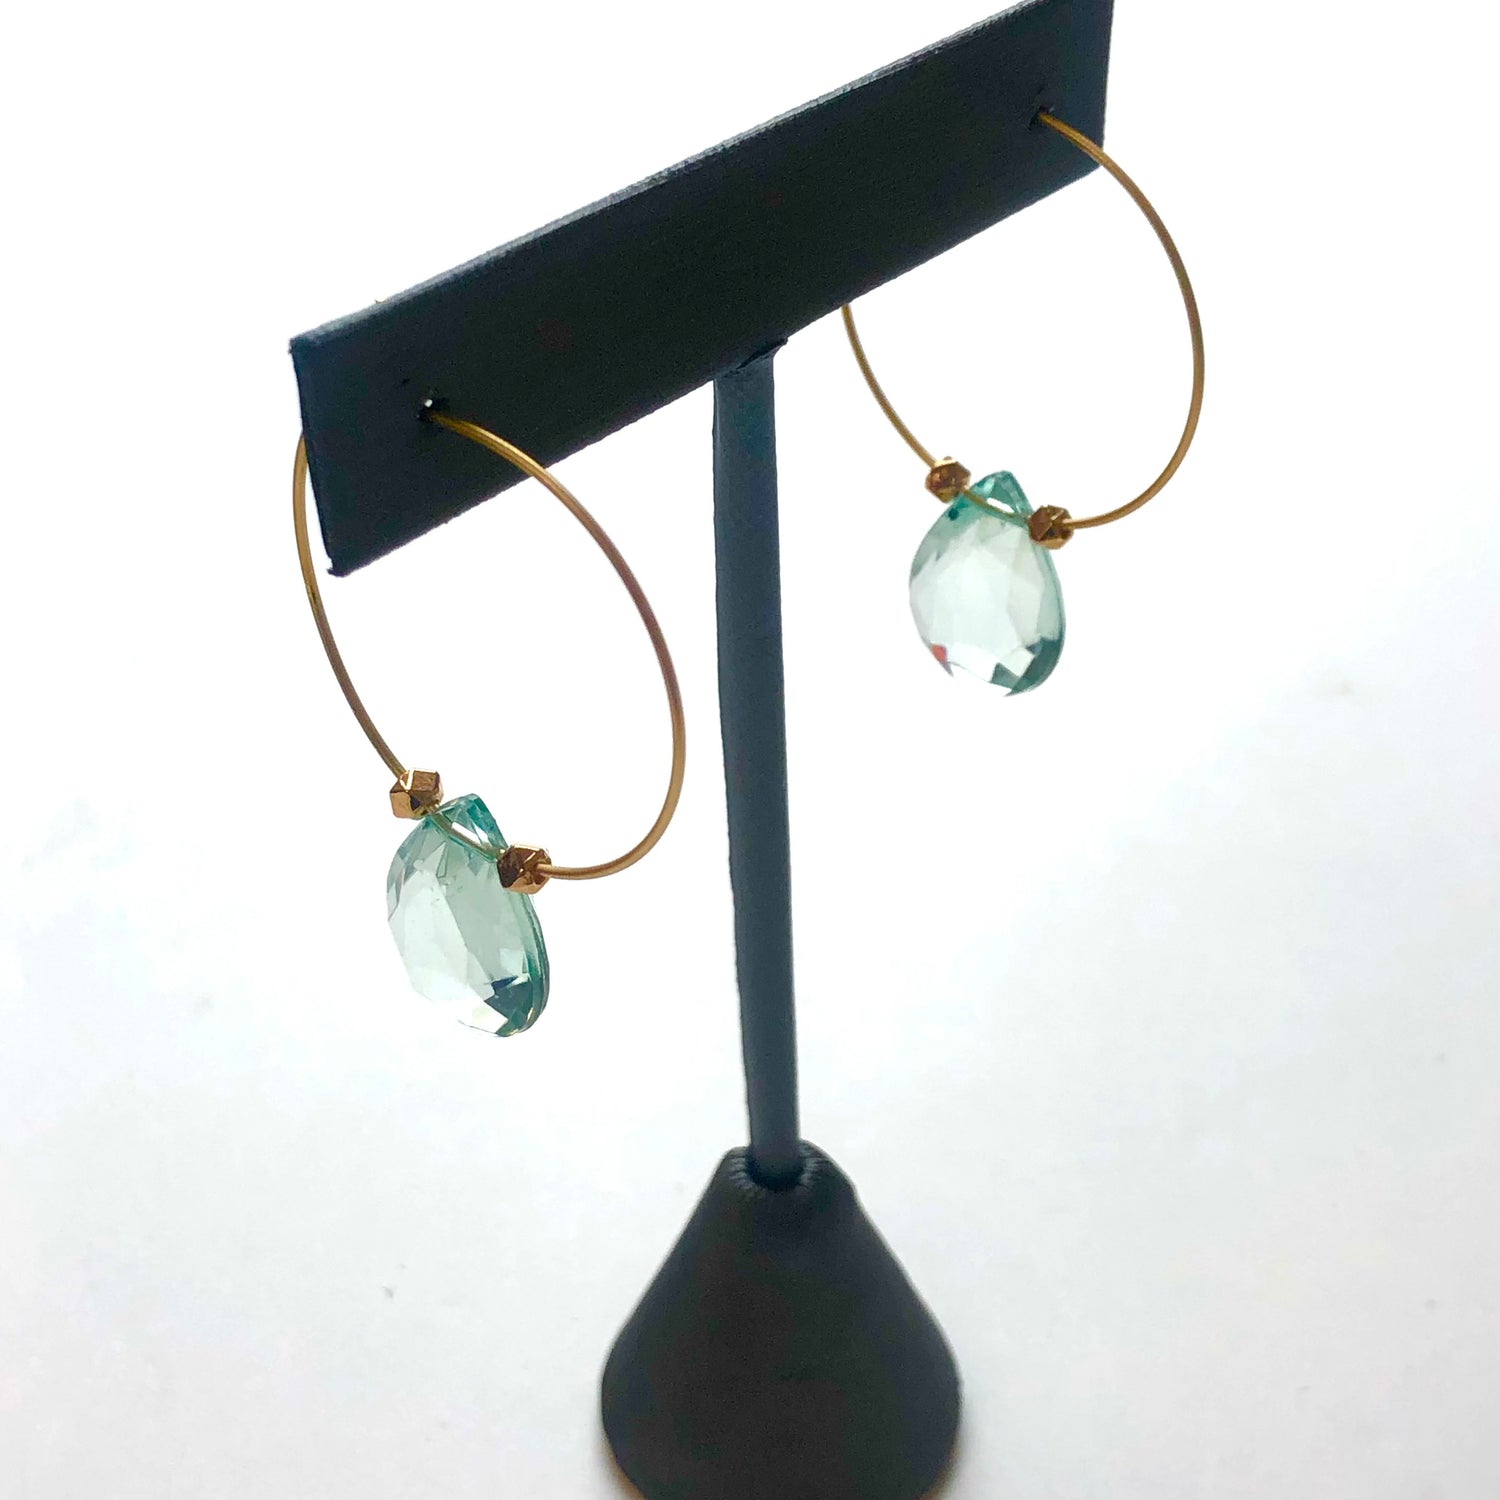 Sage Green Faceted Briolette on Gold Hoop Earrings